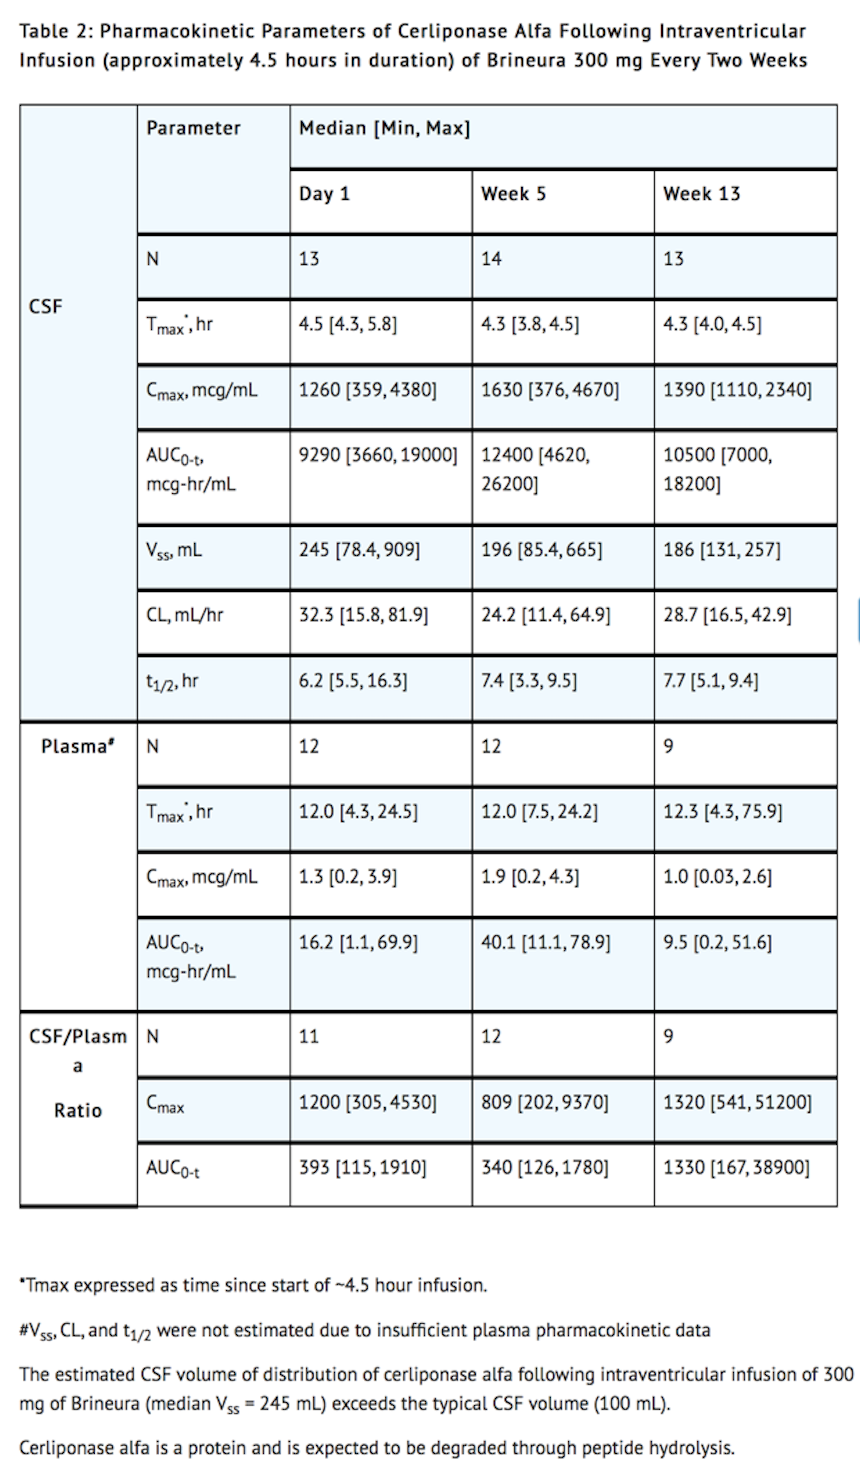 File:Cerliponase Alfa Pharmacokinetics Table.png